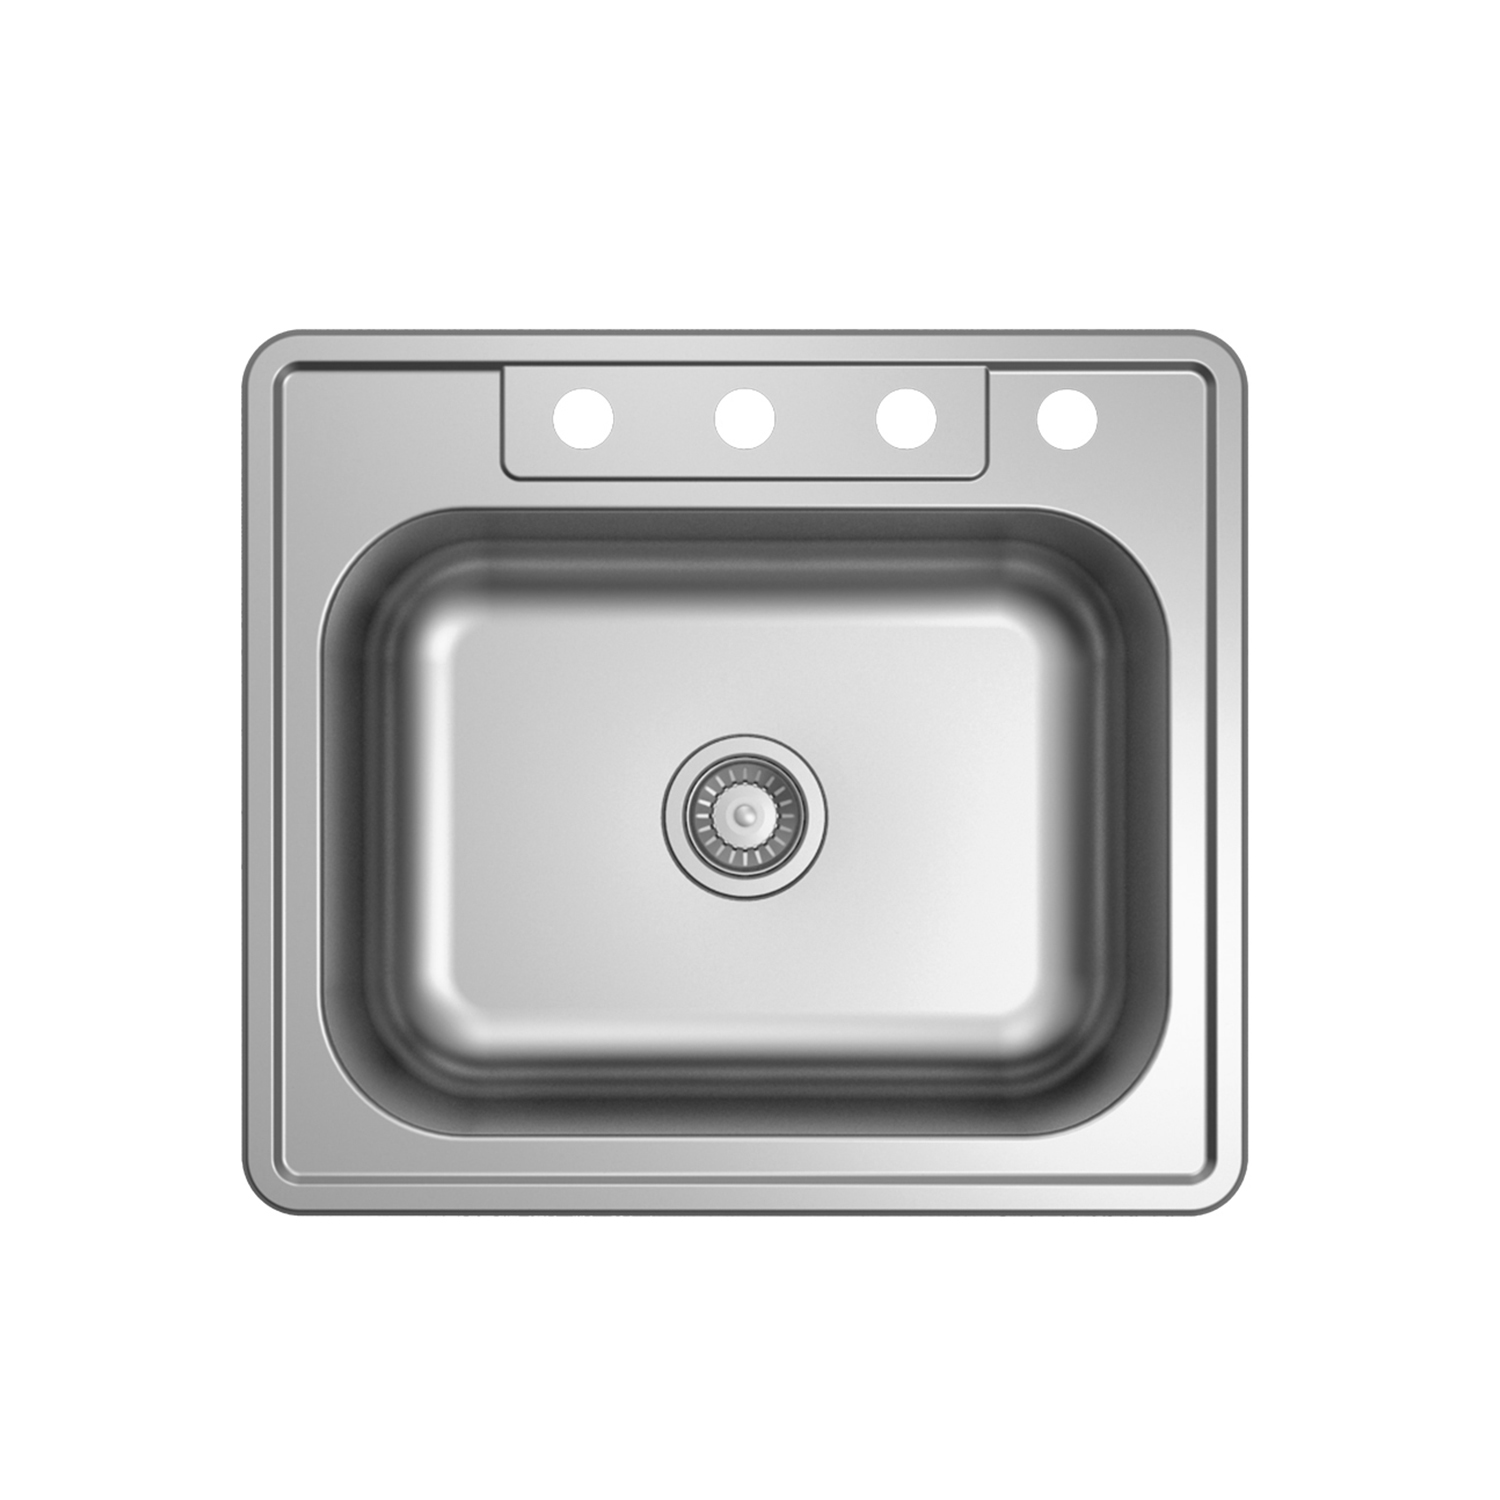 Duko MT2522S Drop in 18 Gauge Single Bowl 304 Stainless Steel Kitchen Sink